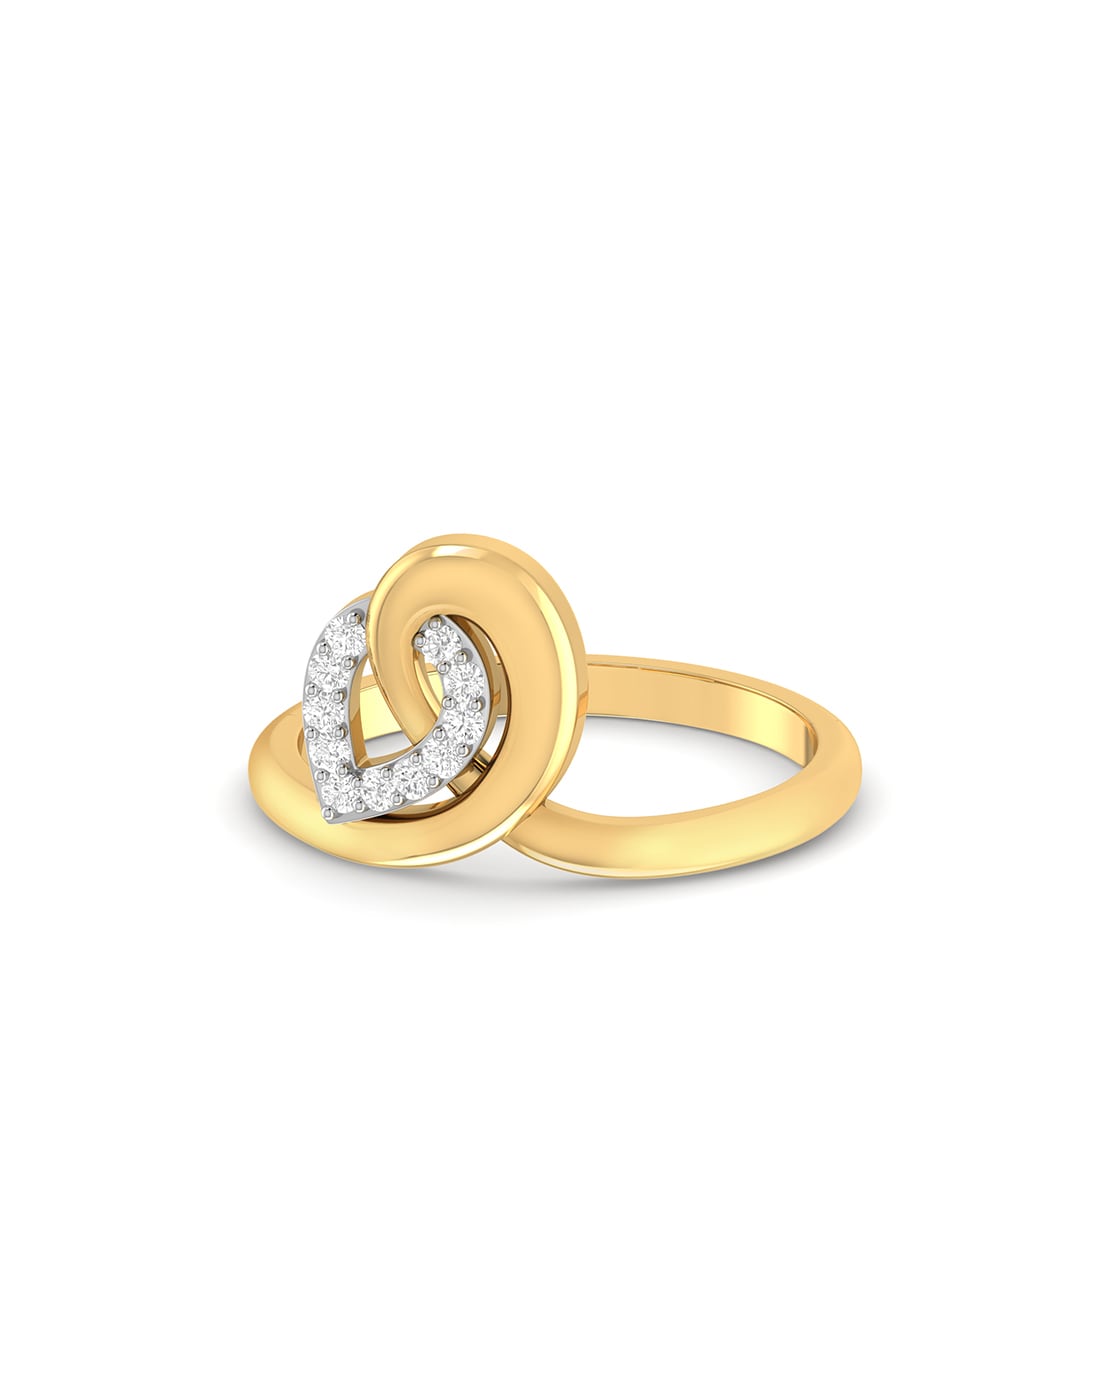 Rae Dunn initial disc ring in yellow gold plated brass– raedunnjewelry